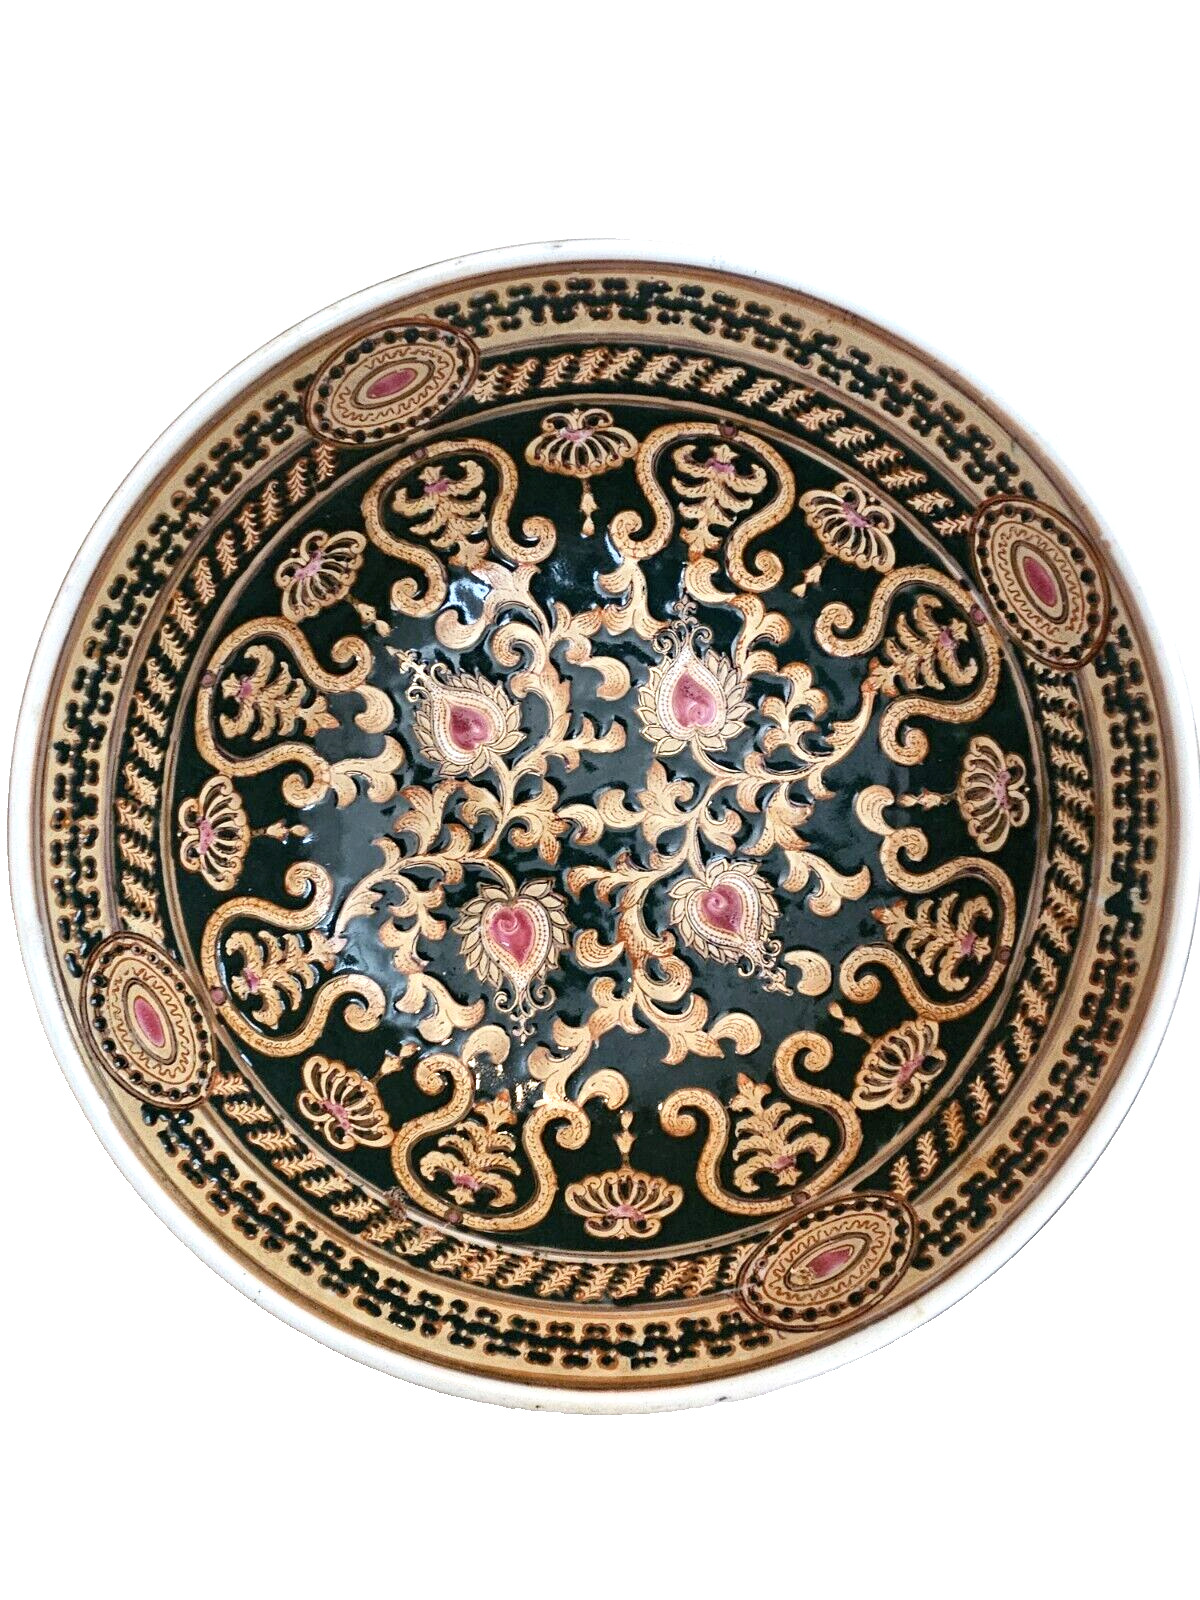 Vintage Ornate Chinese Centerpiece bowl gold pink black signed